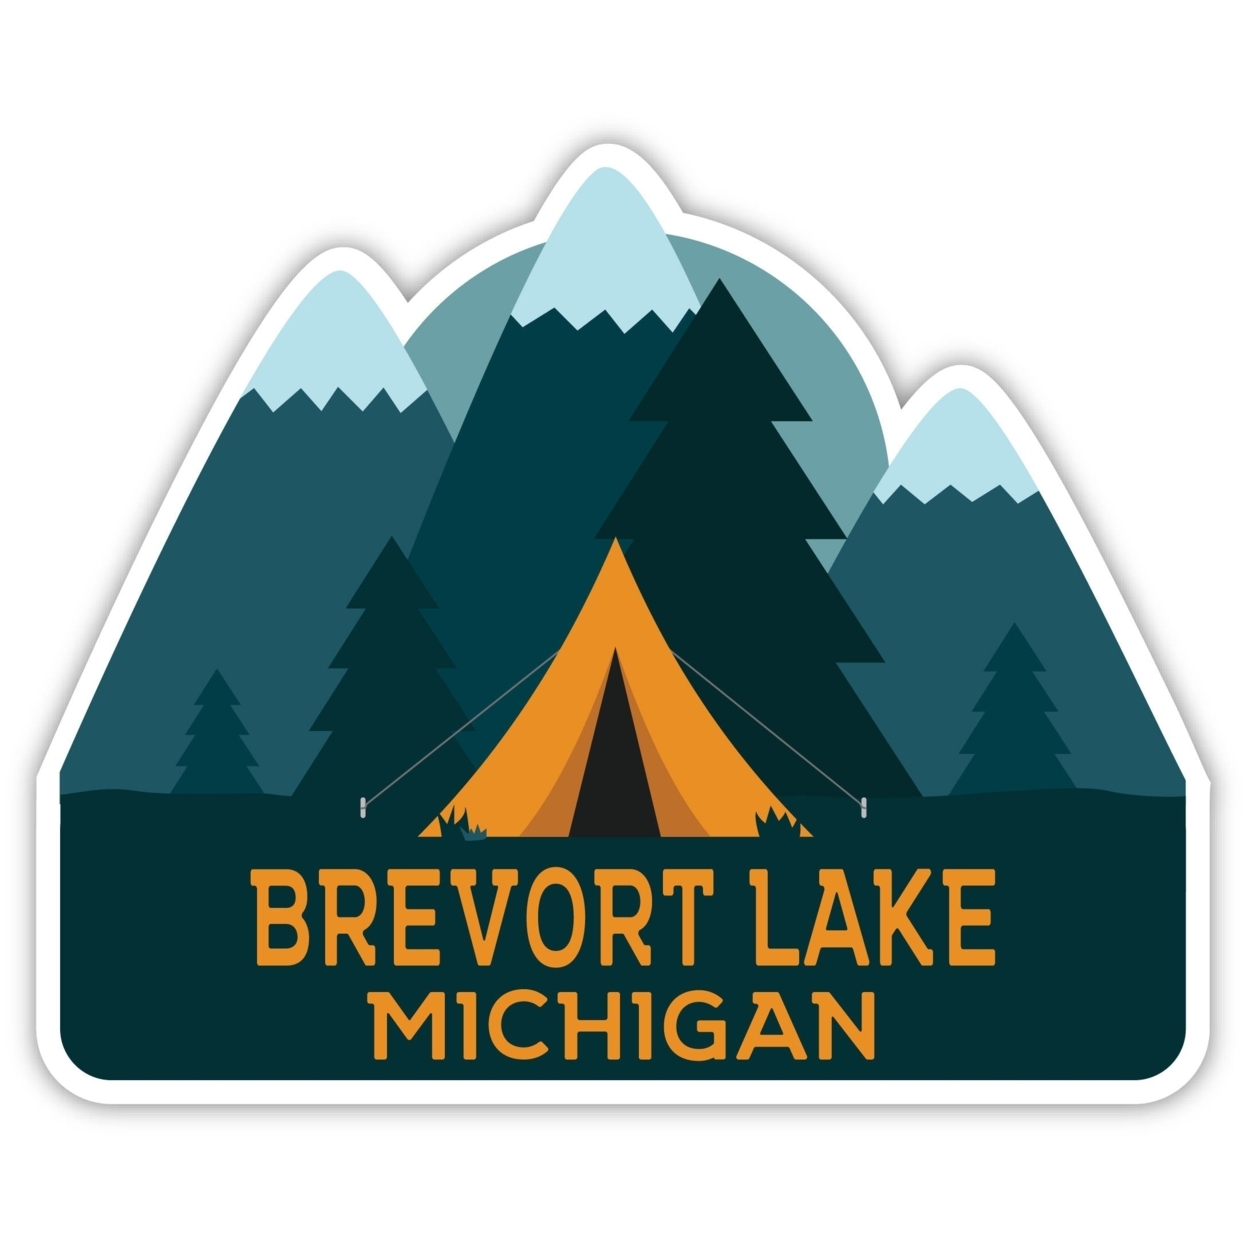 Brevort Lake Michigan Souvenir Decorative Stickers (Choose Theme And Size) - 4-Pack, 8-Inch, Tent